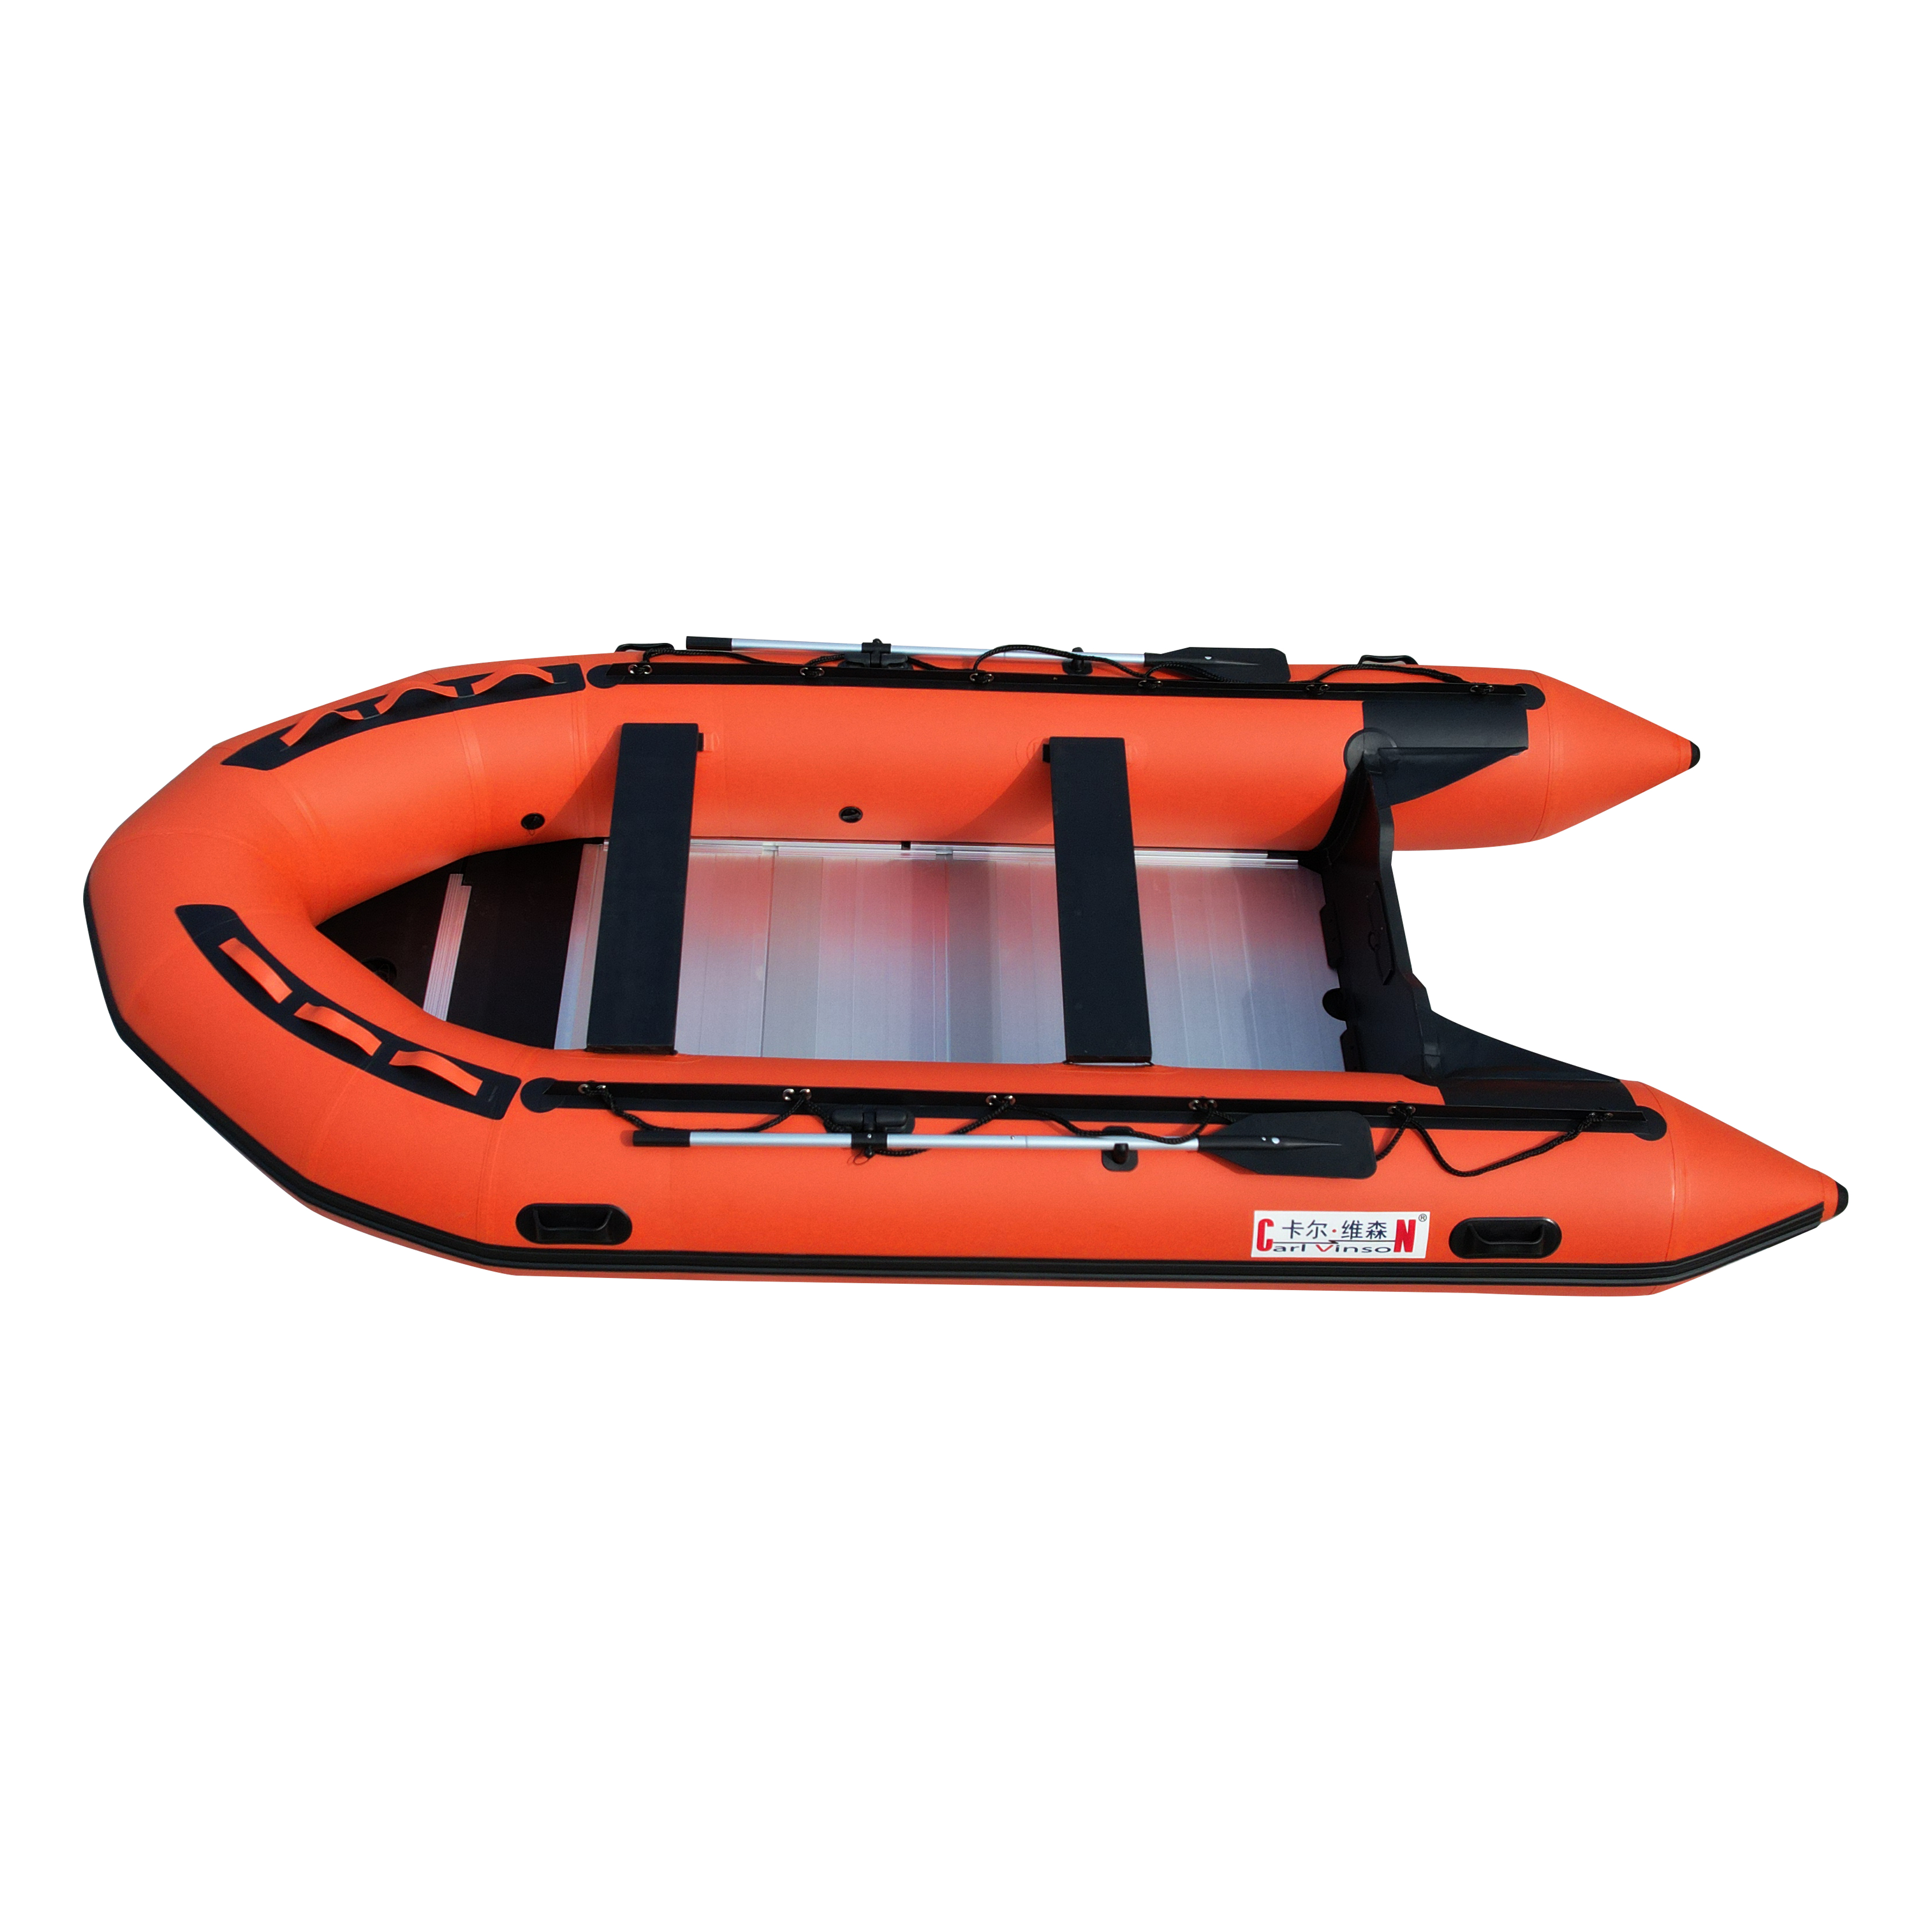 Infaltable Boat/Rescue boat with alumnium floor